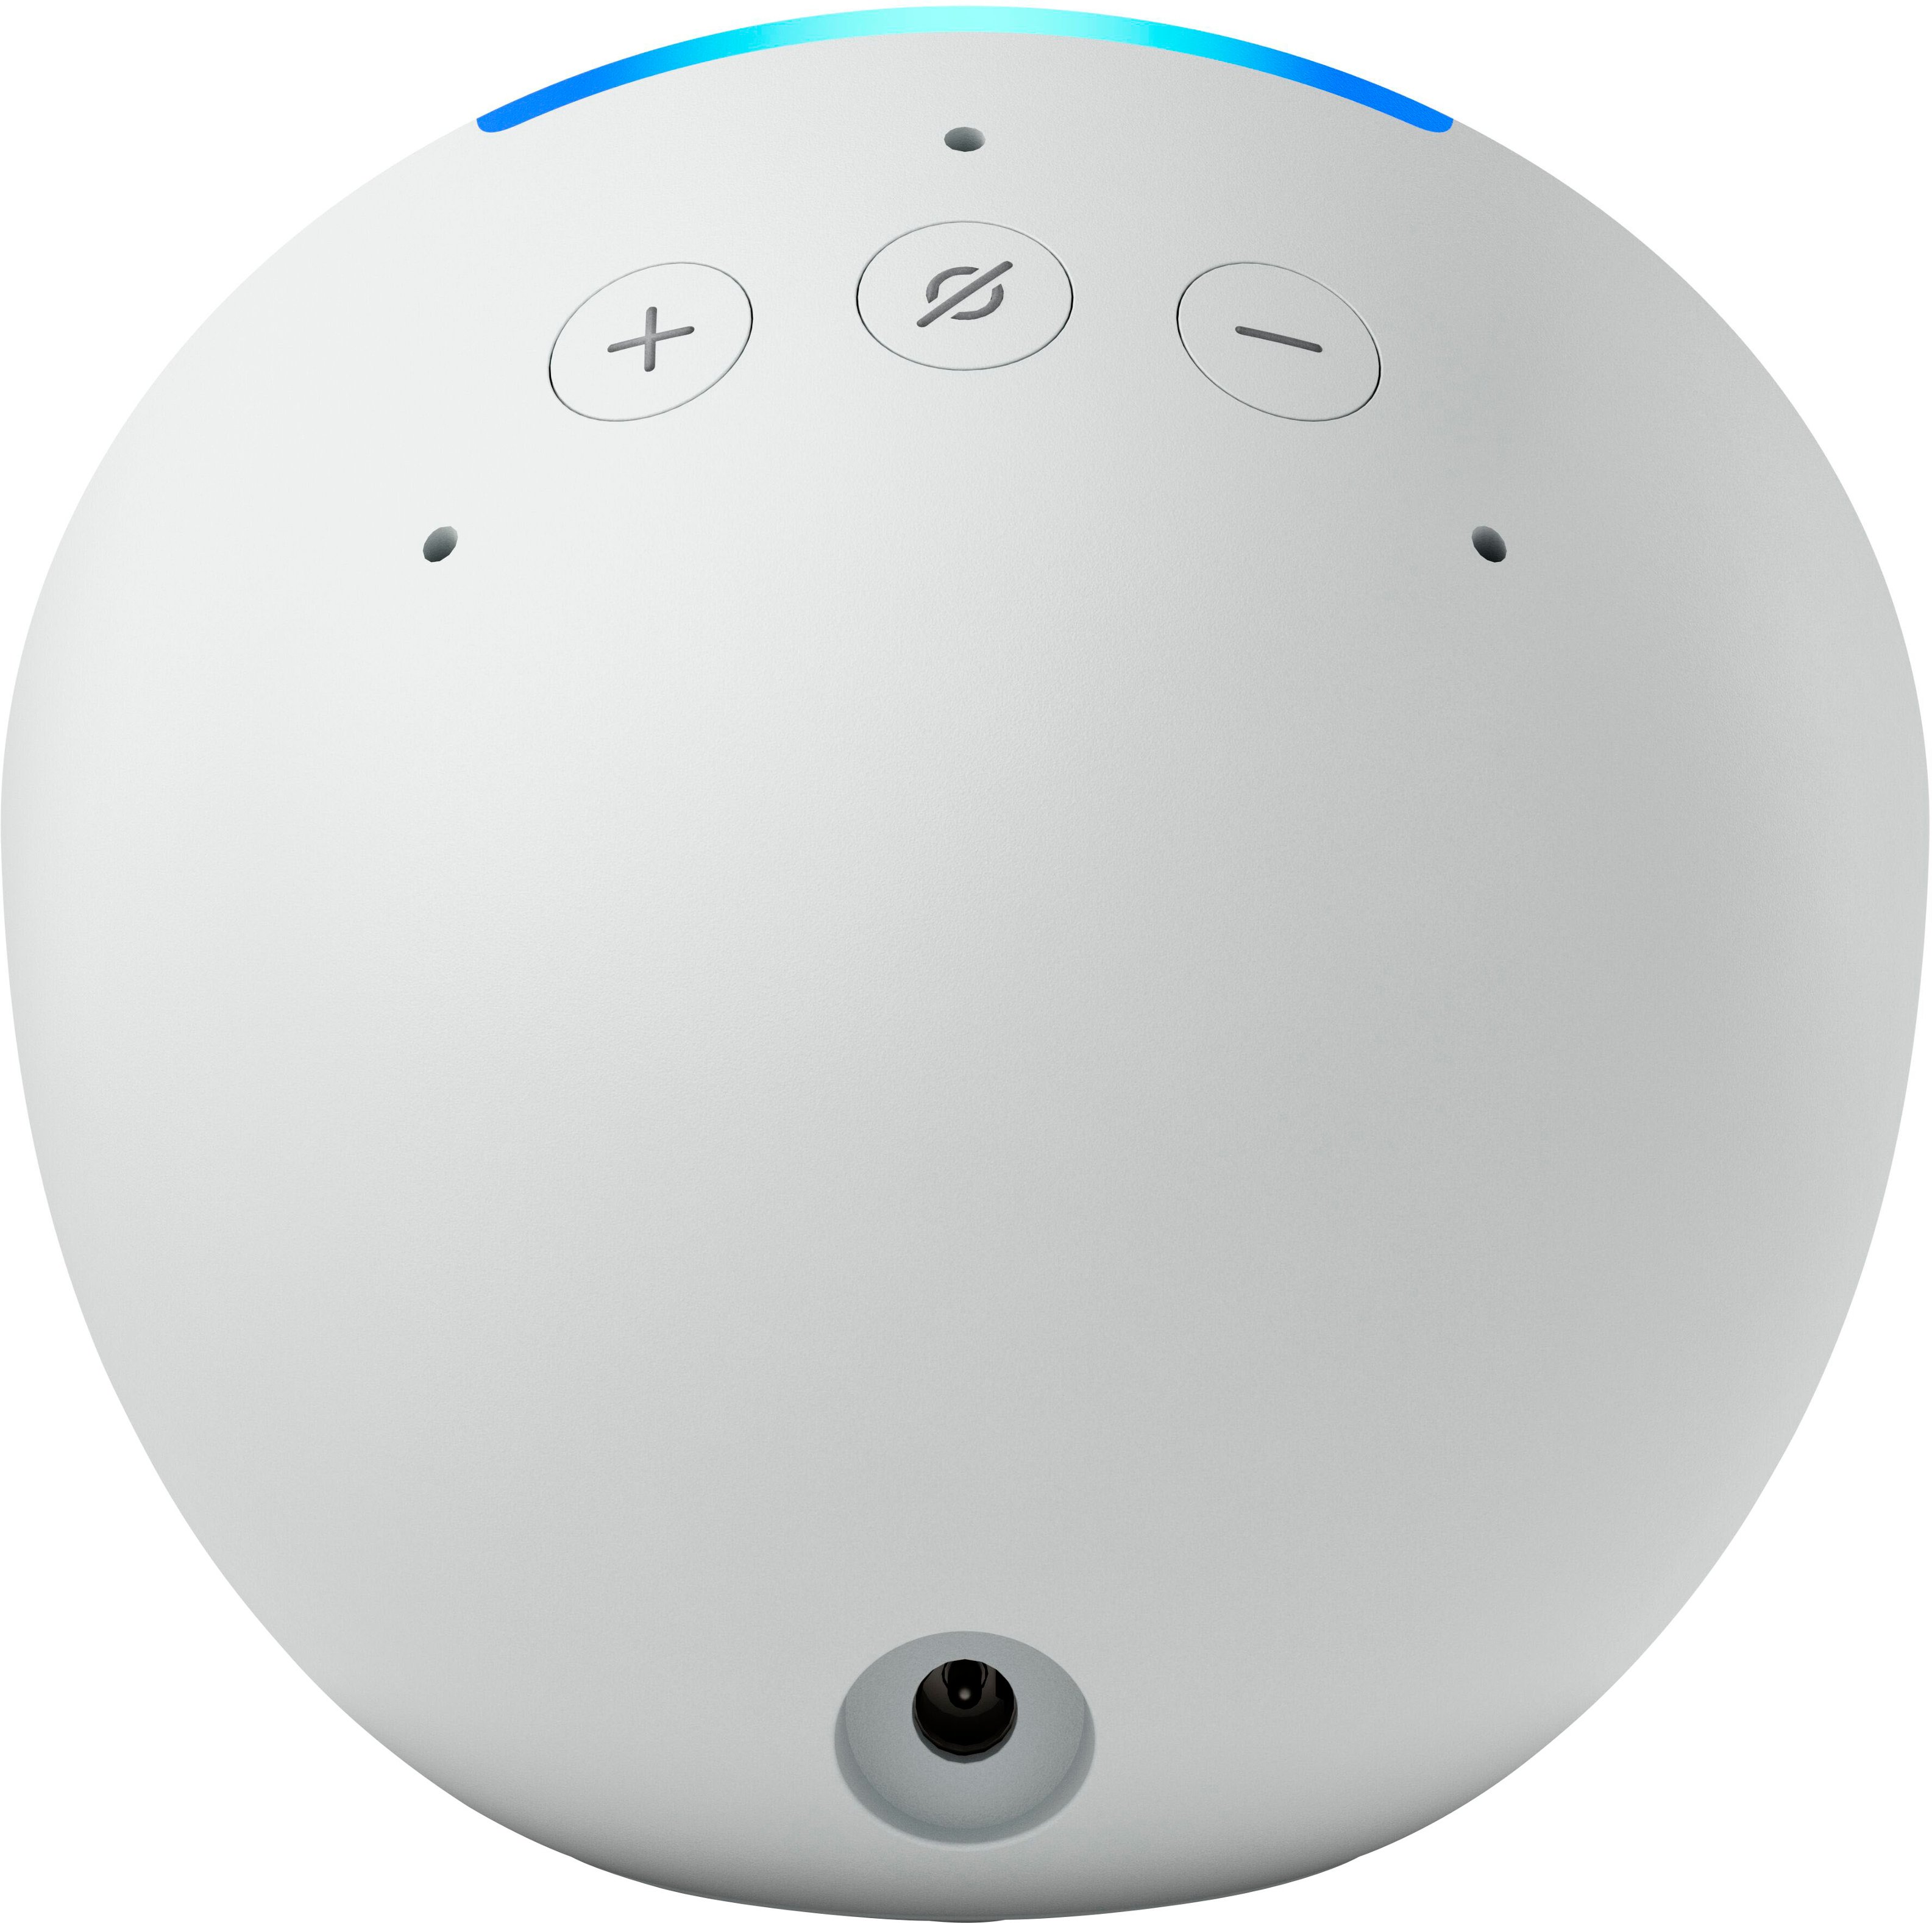 Echo Pop (1st Gen, 2023 Release) Full Sound Compact Smart Speaker  with Alexa, Charcoal B09WNK39JN - The Home Depot